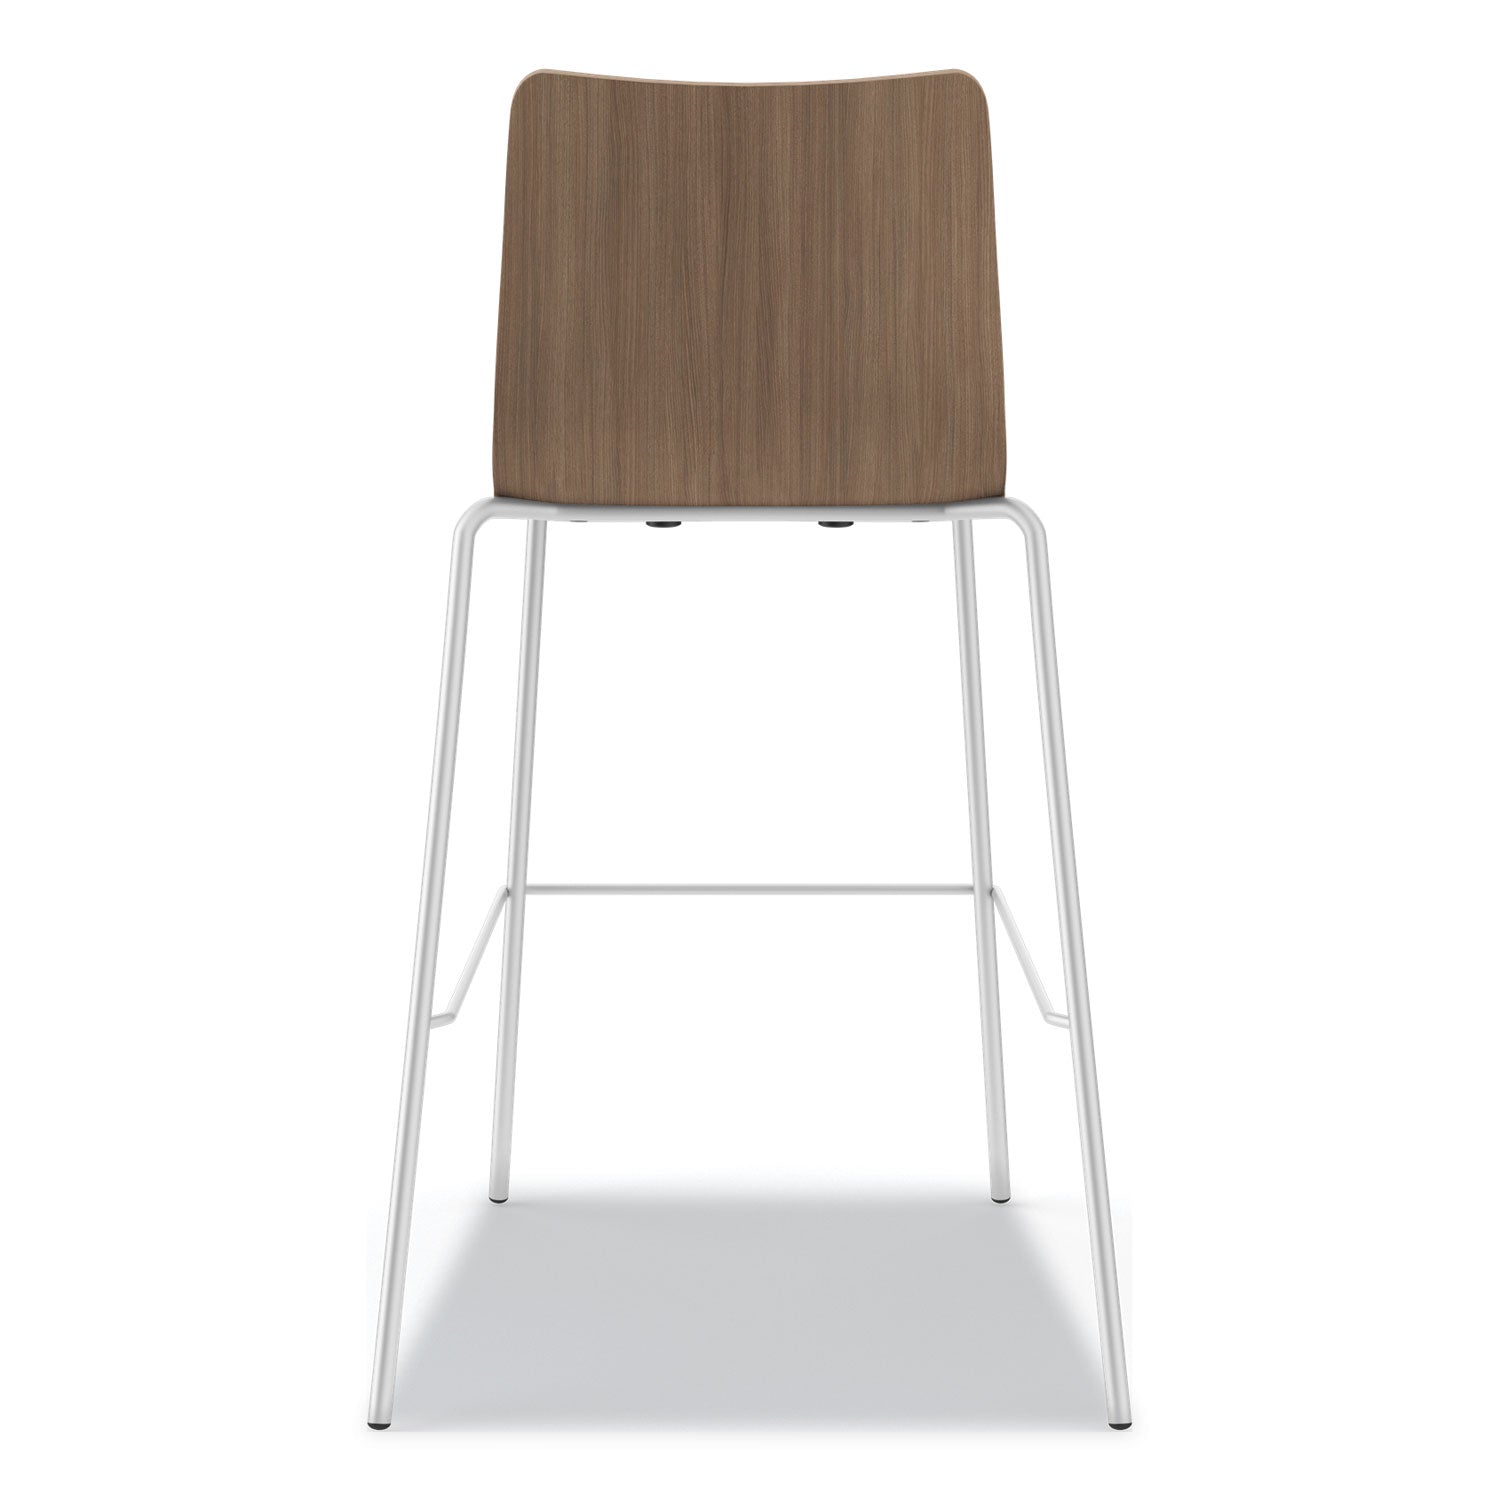 ruck-laminate-task-stool-supports-up-to-300-lb-30-seat-height-pinnacle-seat-base-silver-frame_honruck5lpincp8 - 3